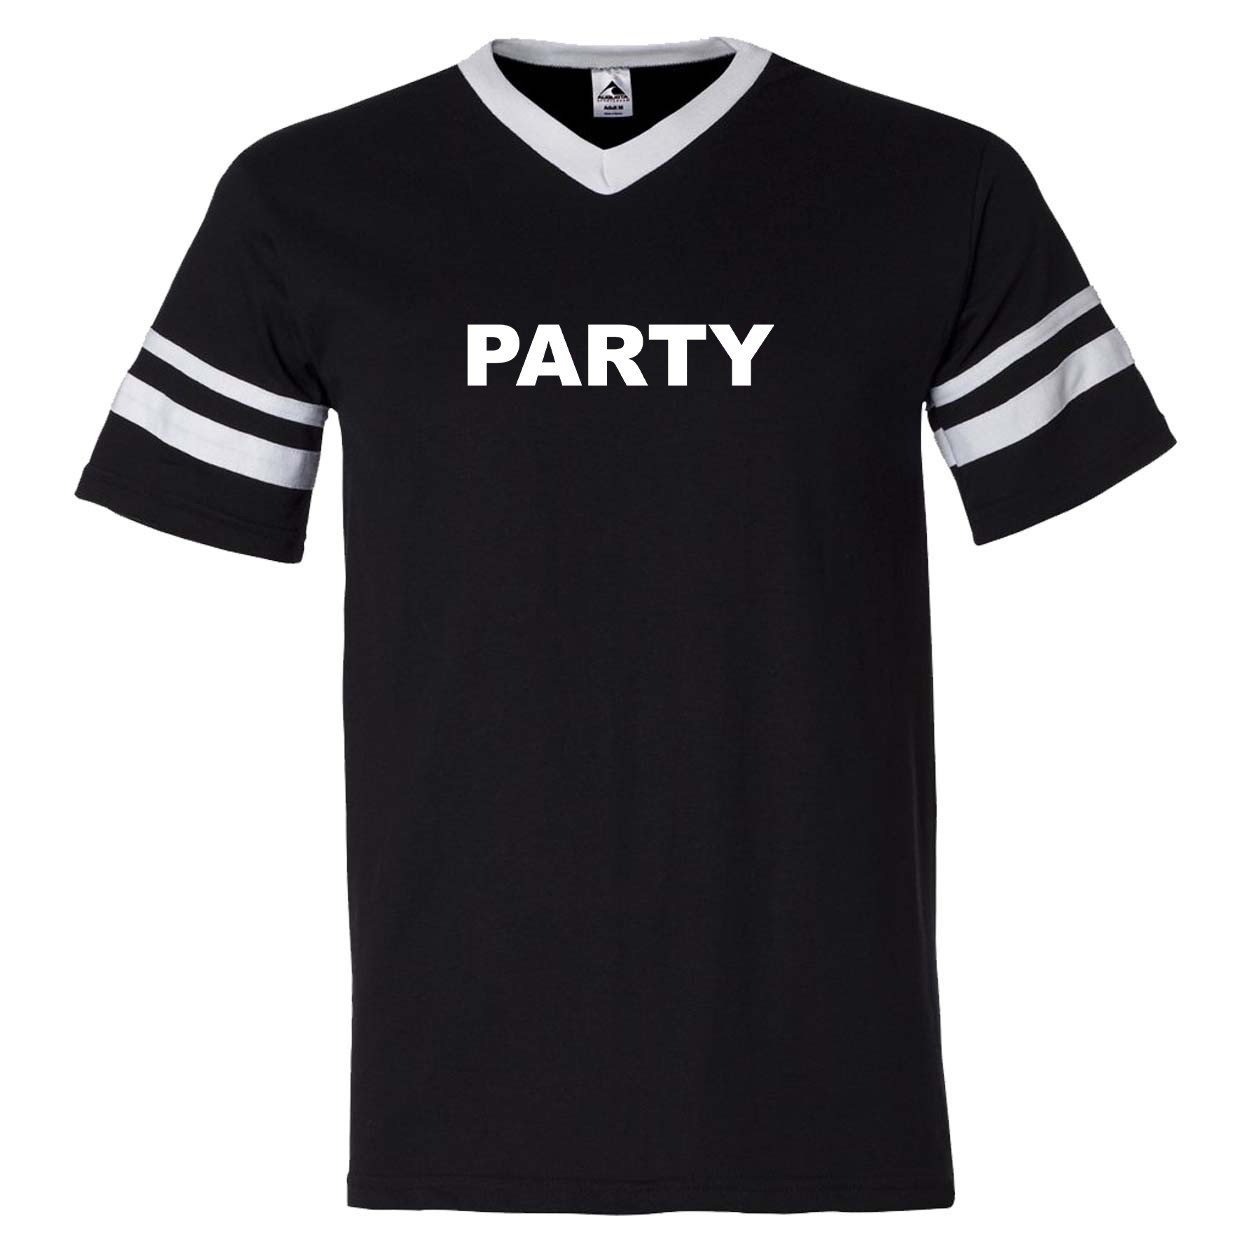 Party Brand Logo Classic Premium Striped Jersey T-Shirt Black/White (White Logo)